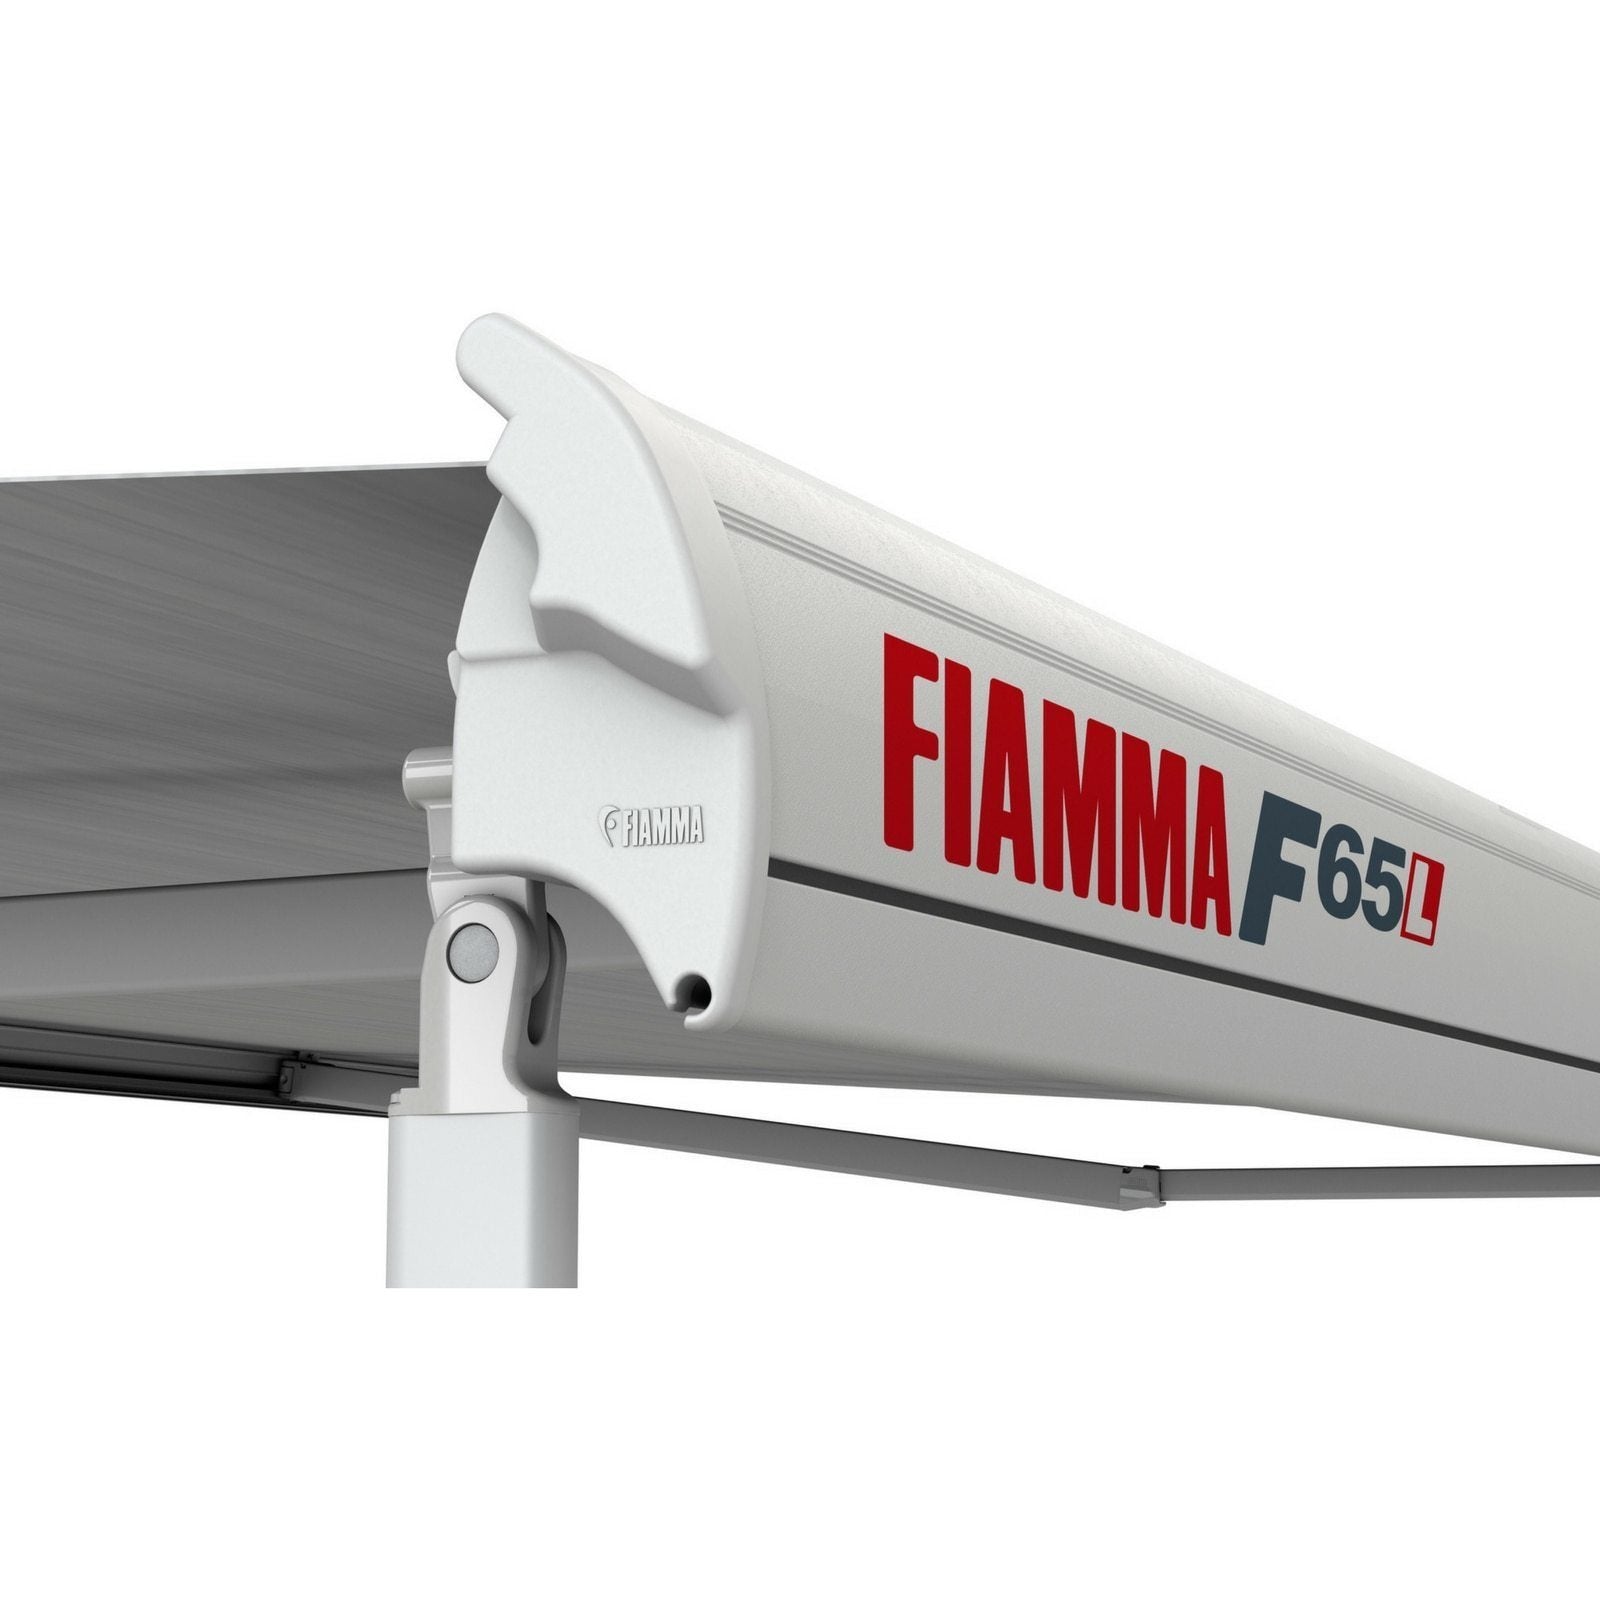 Fiamma F65L Titanium Motorhome Awning made by Fiamma. A Motorhome Awnings sold by Quality Caravan Awnings